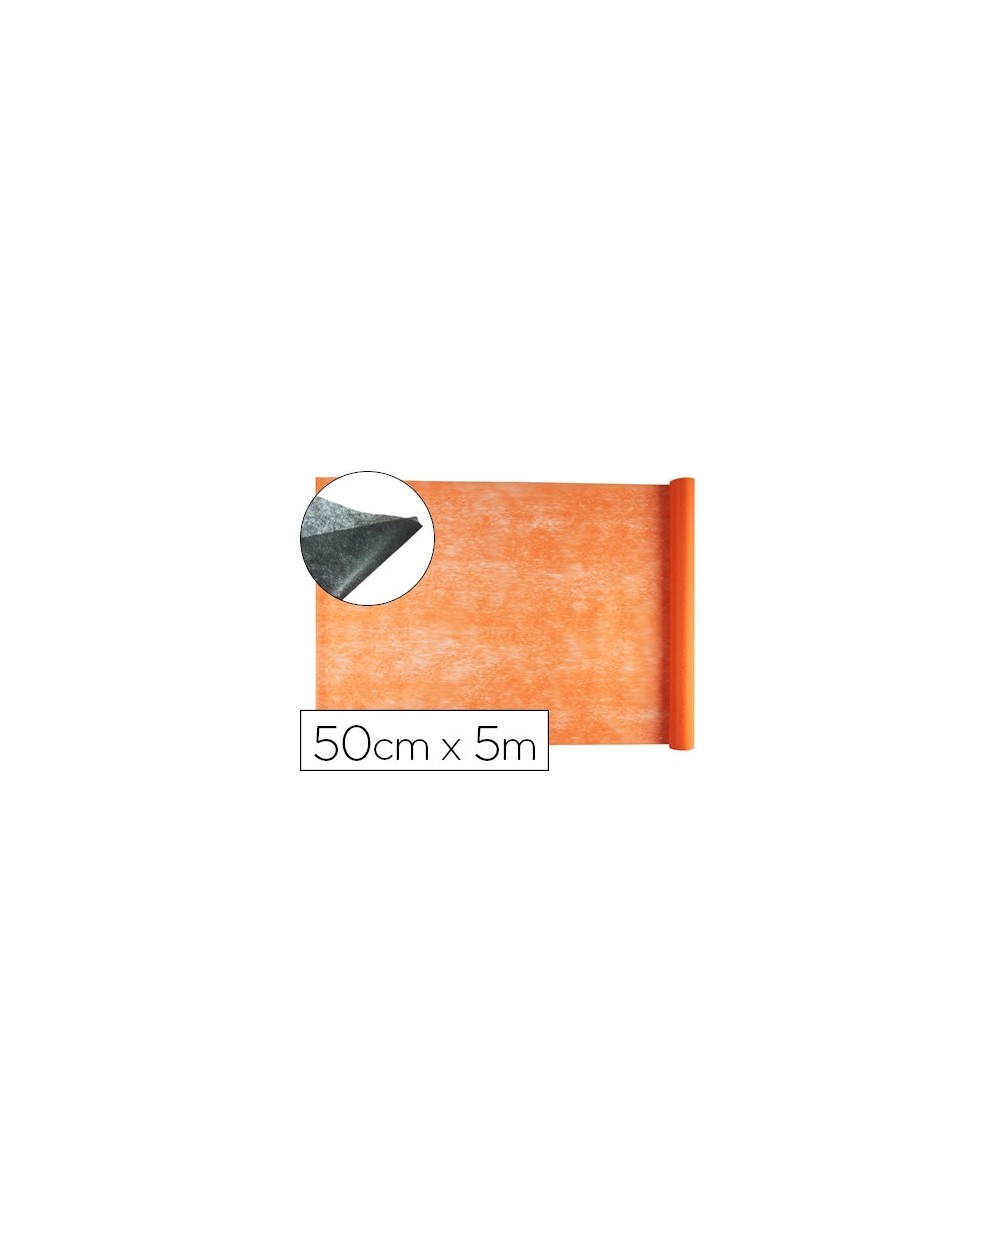 Tejido sin tejer liderpapel terileno 25 g m2 rollo de 5 mt naranja